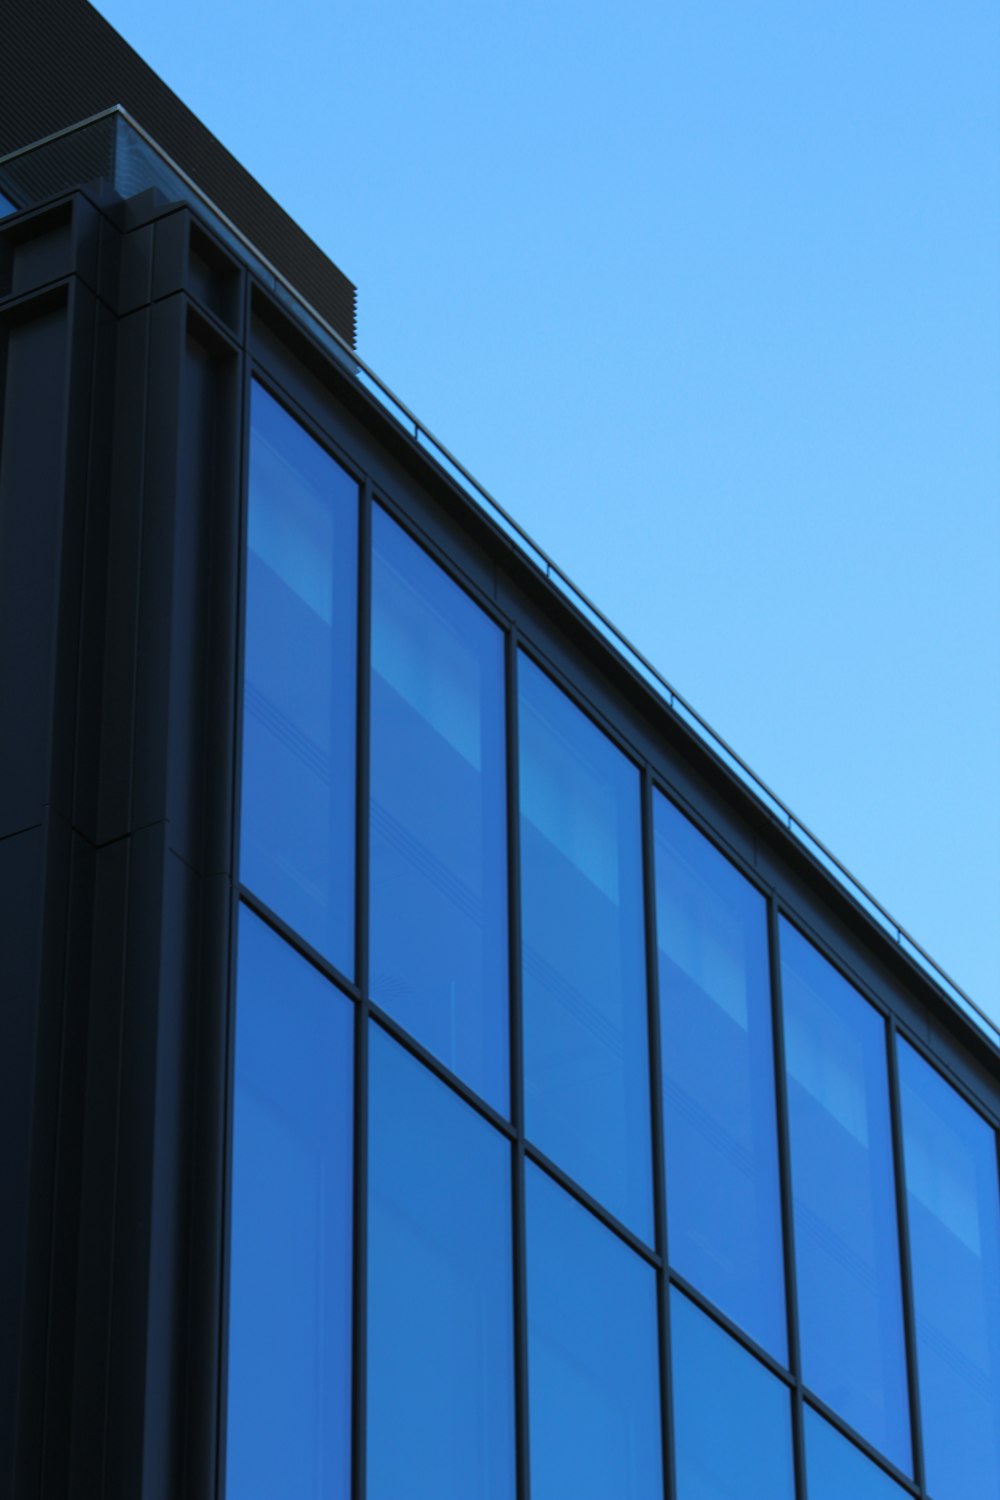 black glass window building under blue sky during daytime